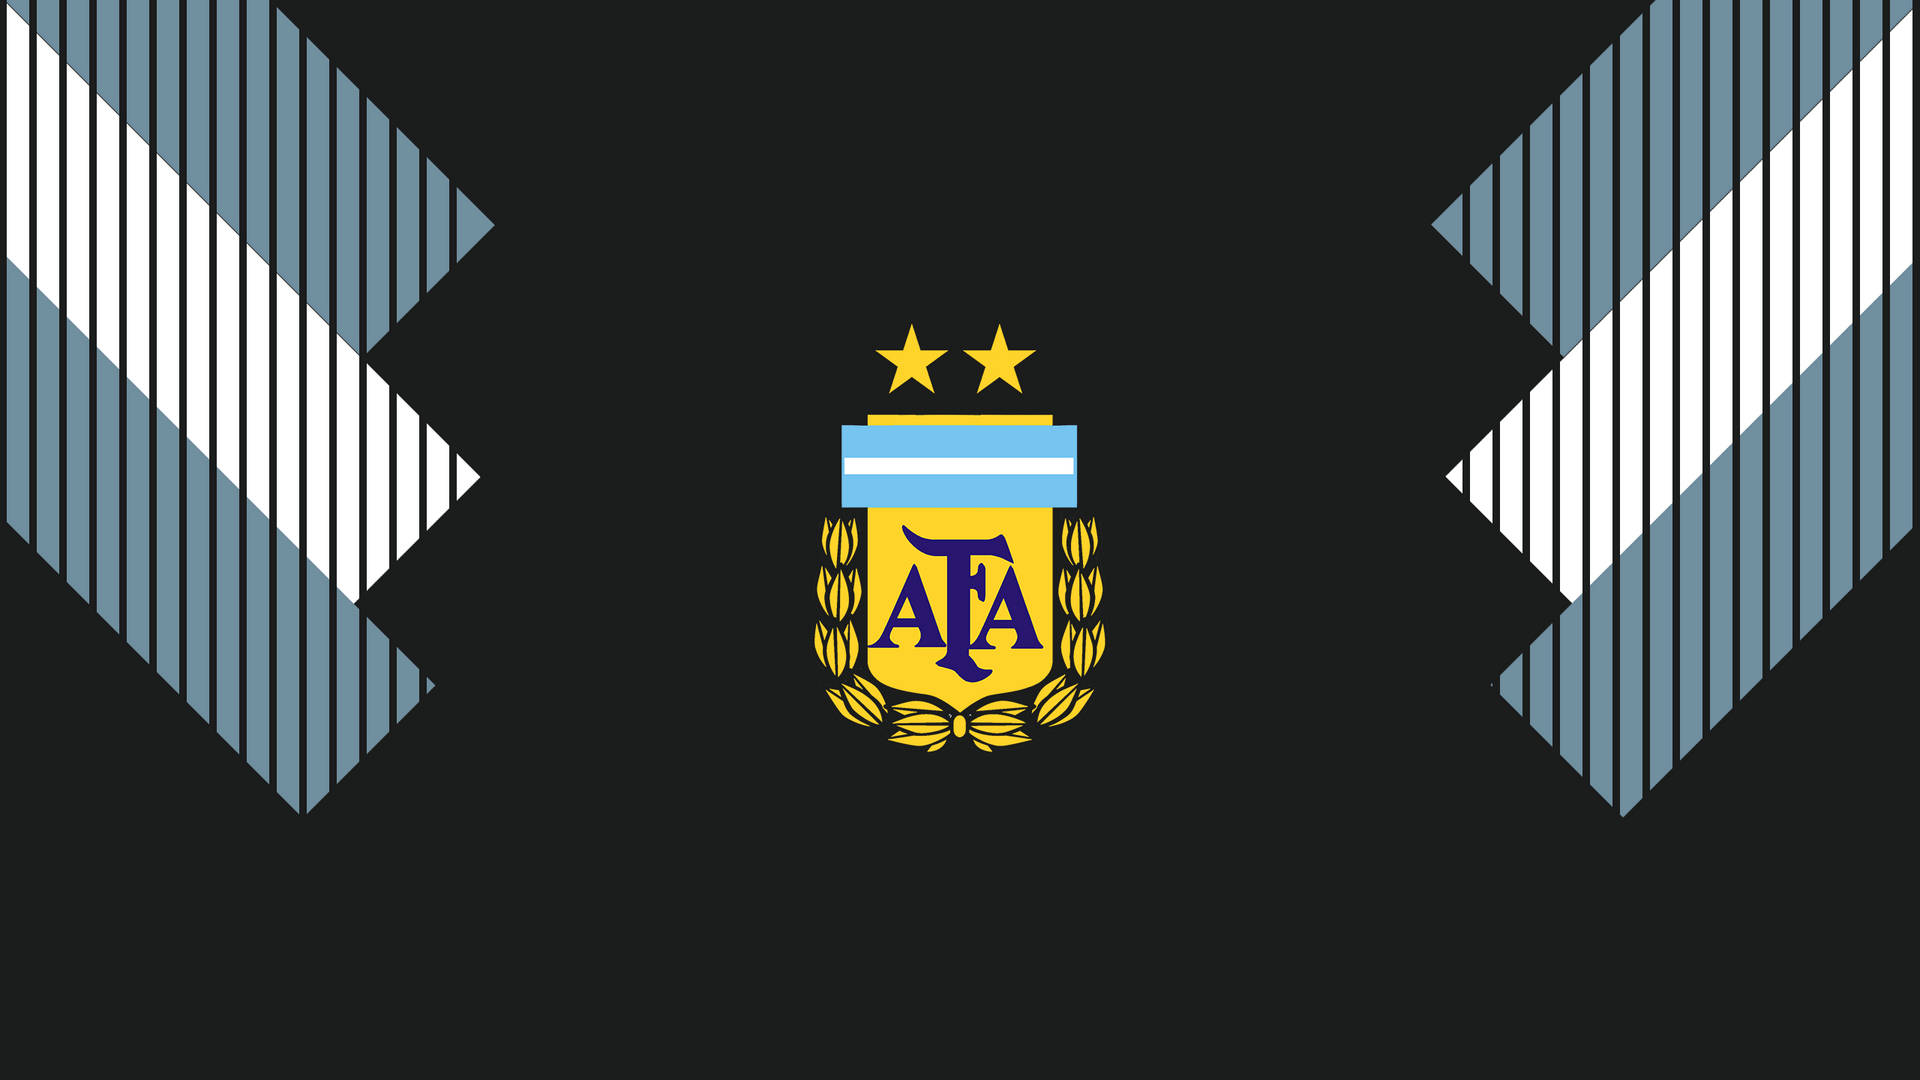 Argentina National Football Team Crest on a Black Background Wallpaper